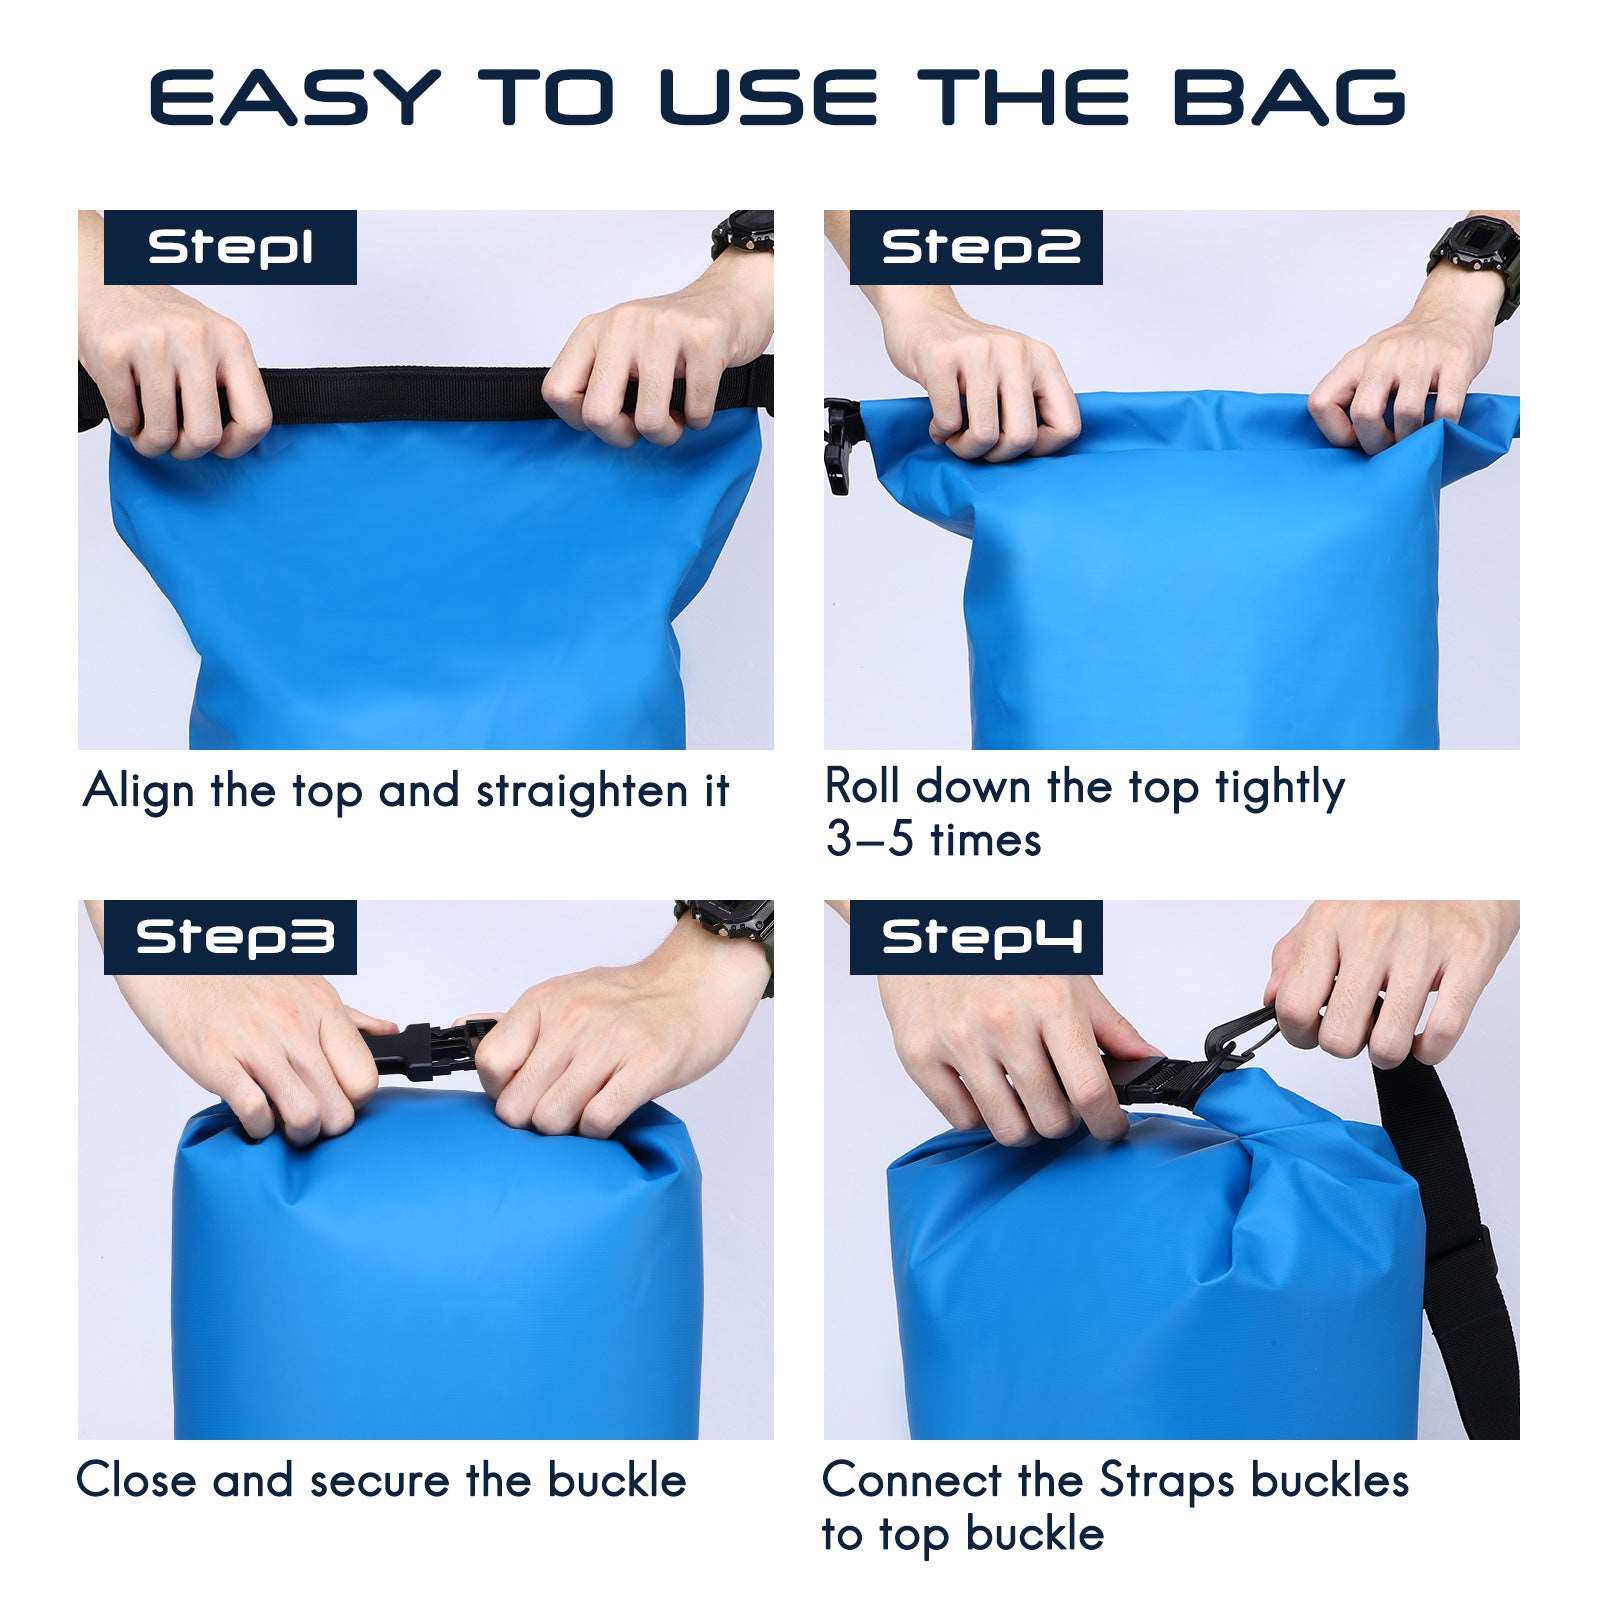 Haimont Large Waterproof Duffel Bag Roll-Top Dry Backpack, Navy